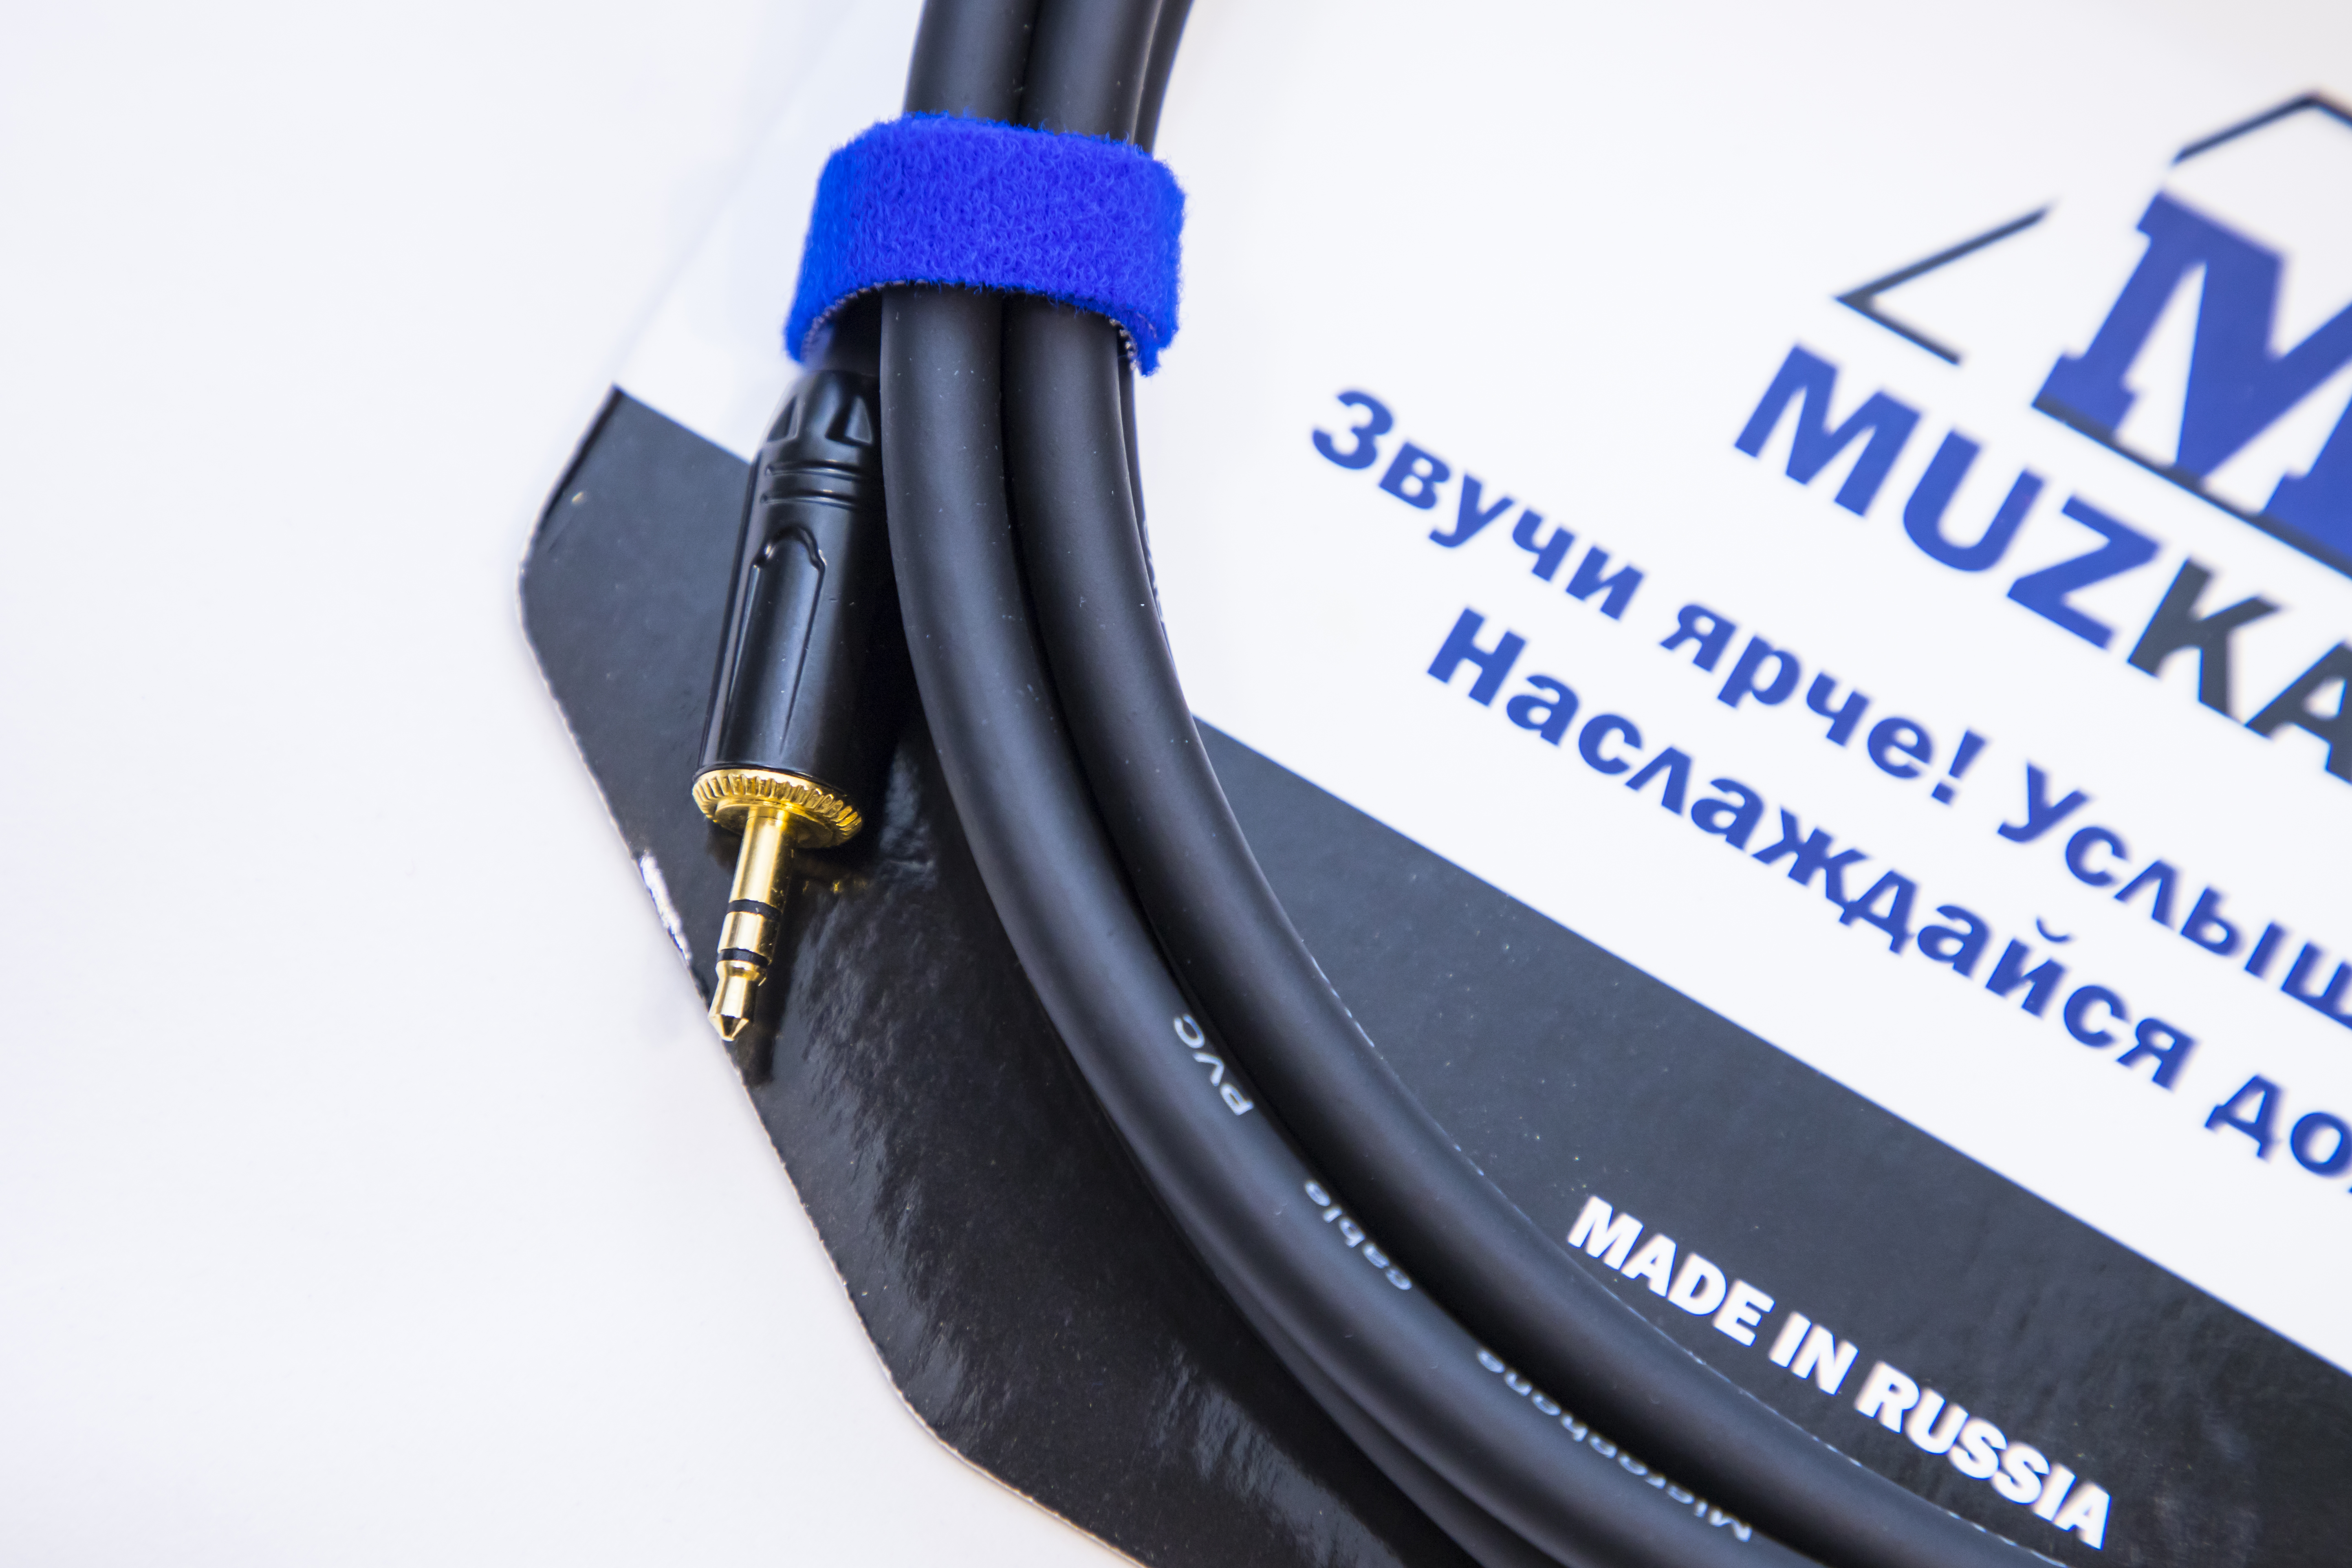 Аудио кабель MUZKABEL MFXMK1B - 6 метров, MINI JACK (3.5) - MINI JACK (3.5)